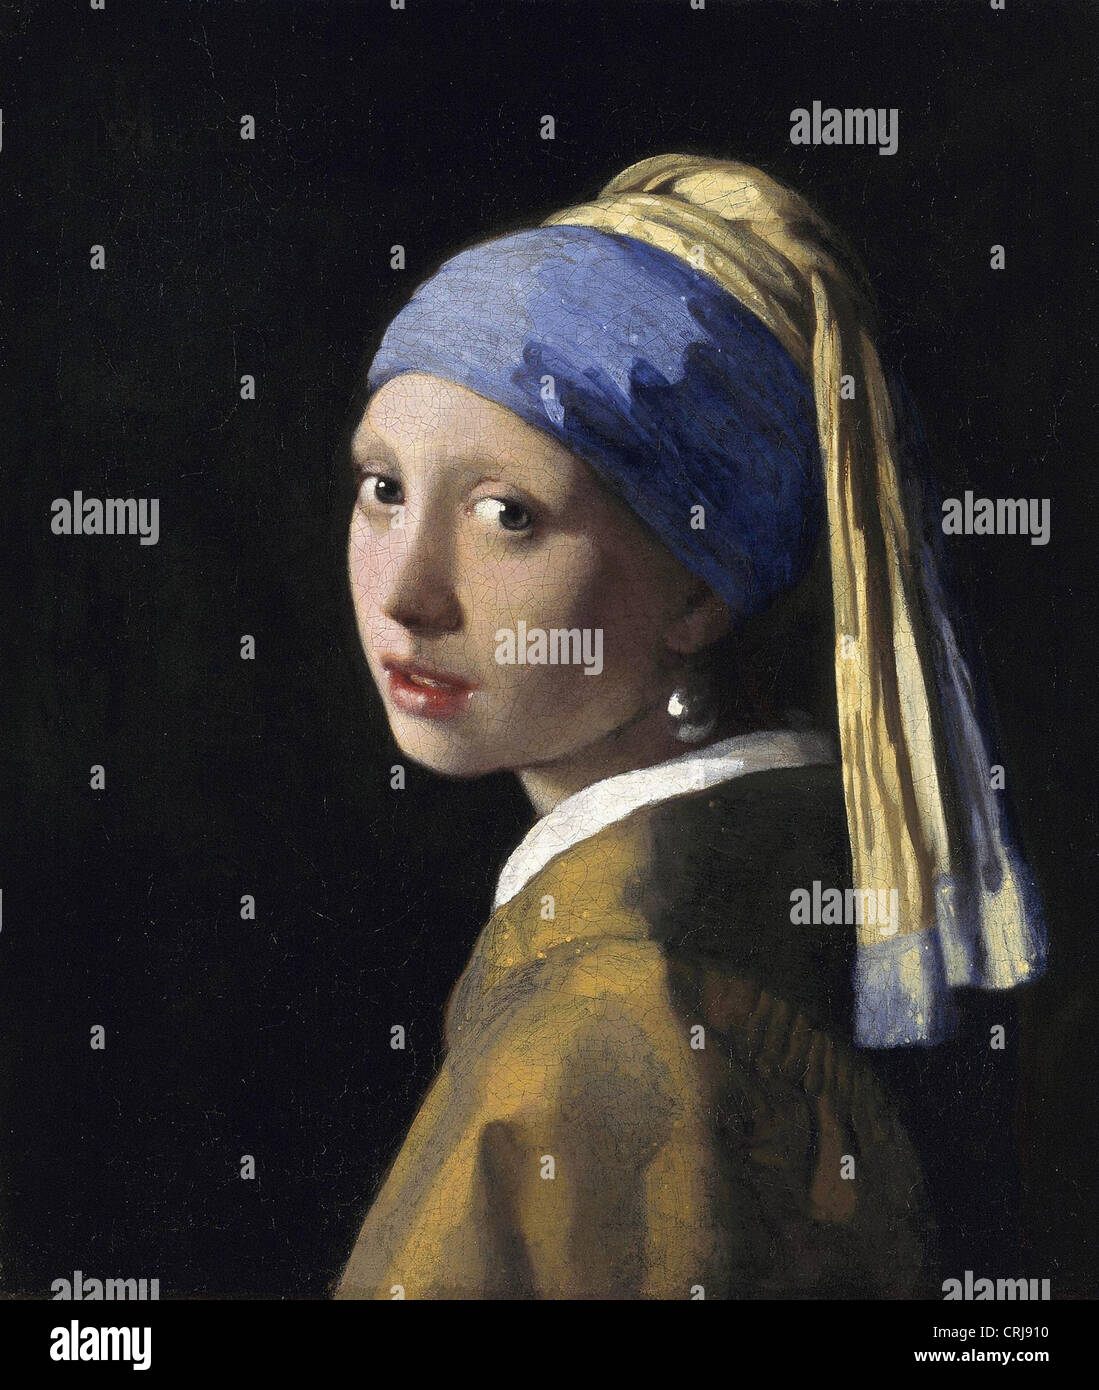 Jan Vermeer van Delft Girl with a Pearl Earring. c.1665 The Hague - Netherlands Stock Photo